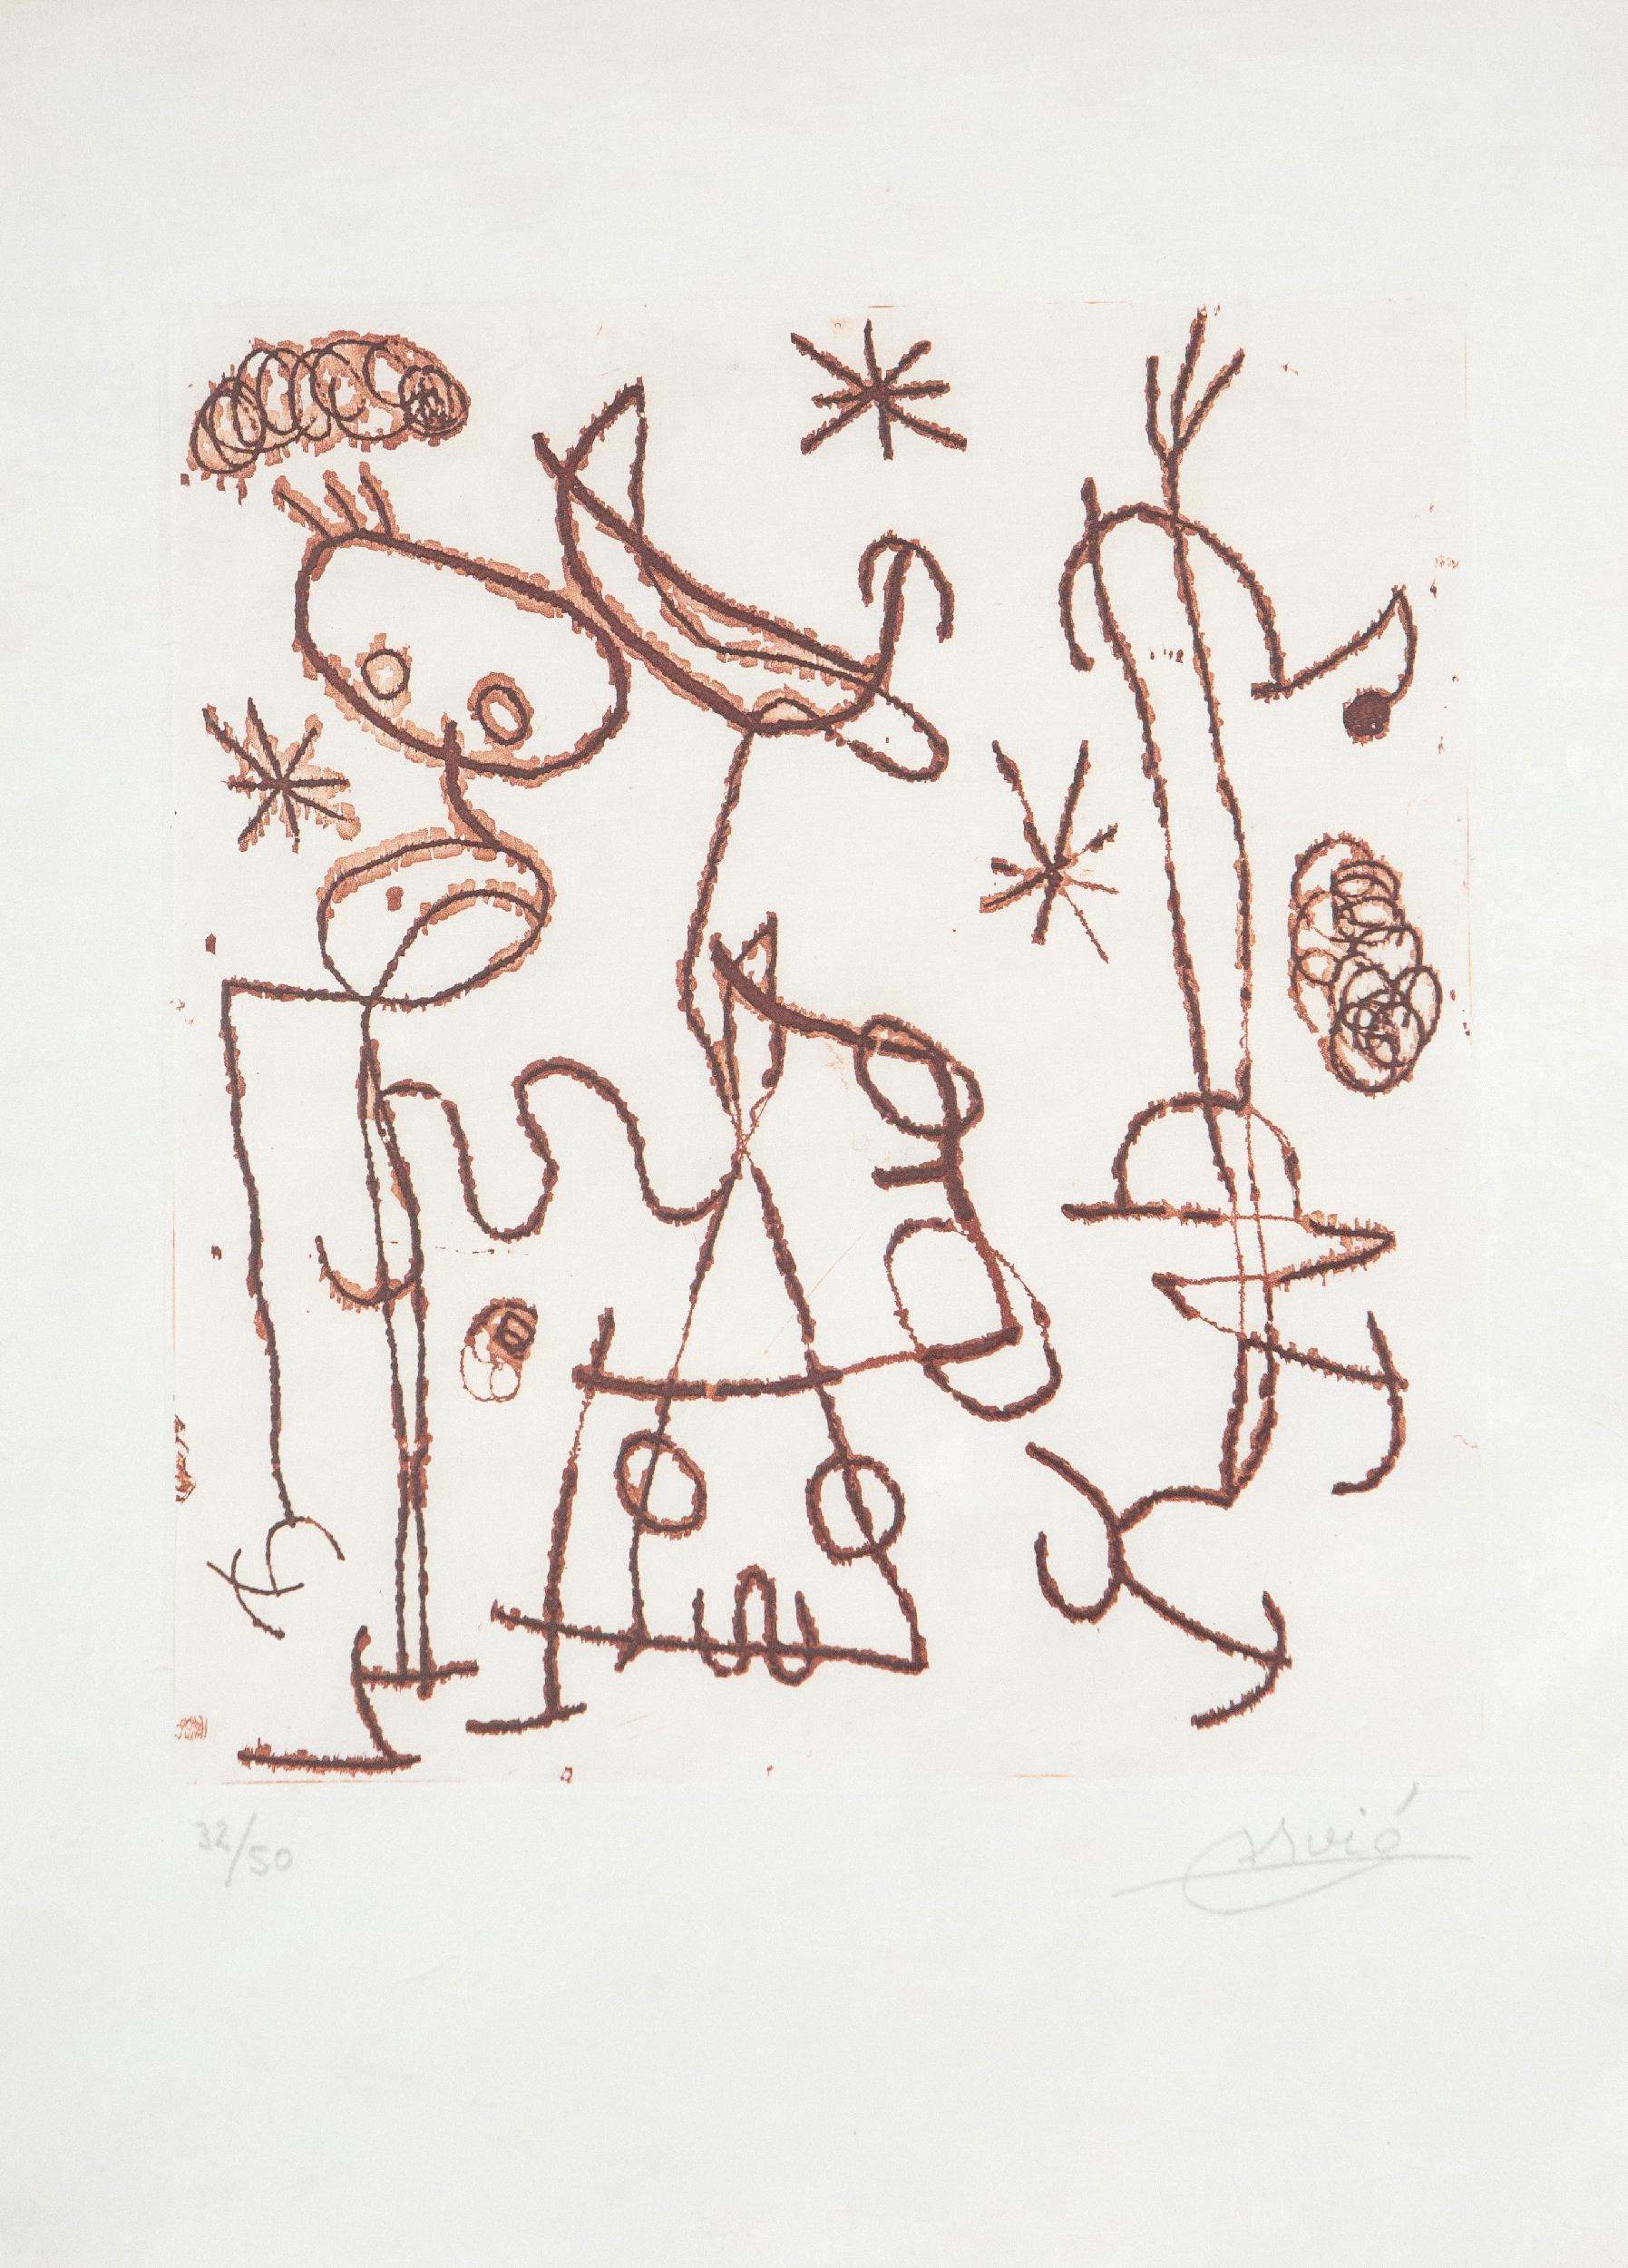 Paroles Peintes III - Print by Joan Miró